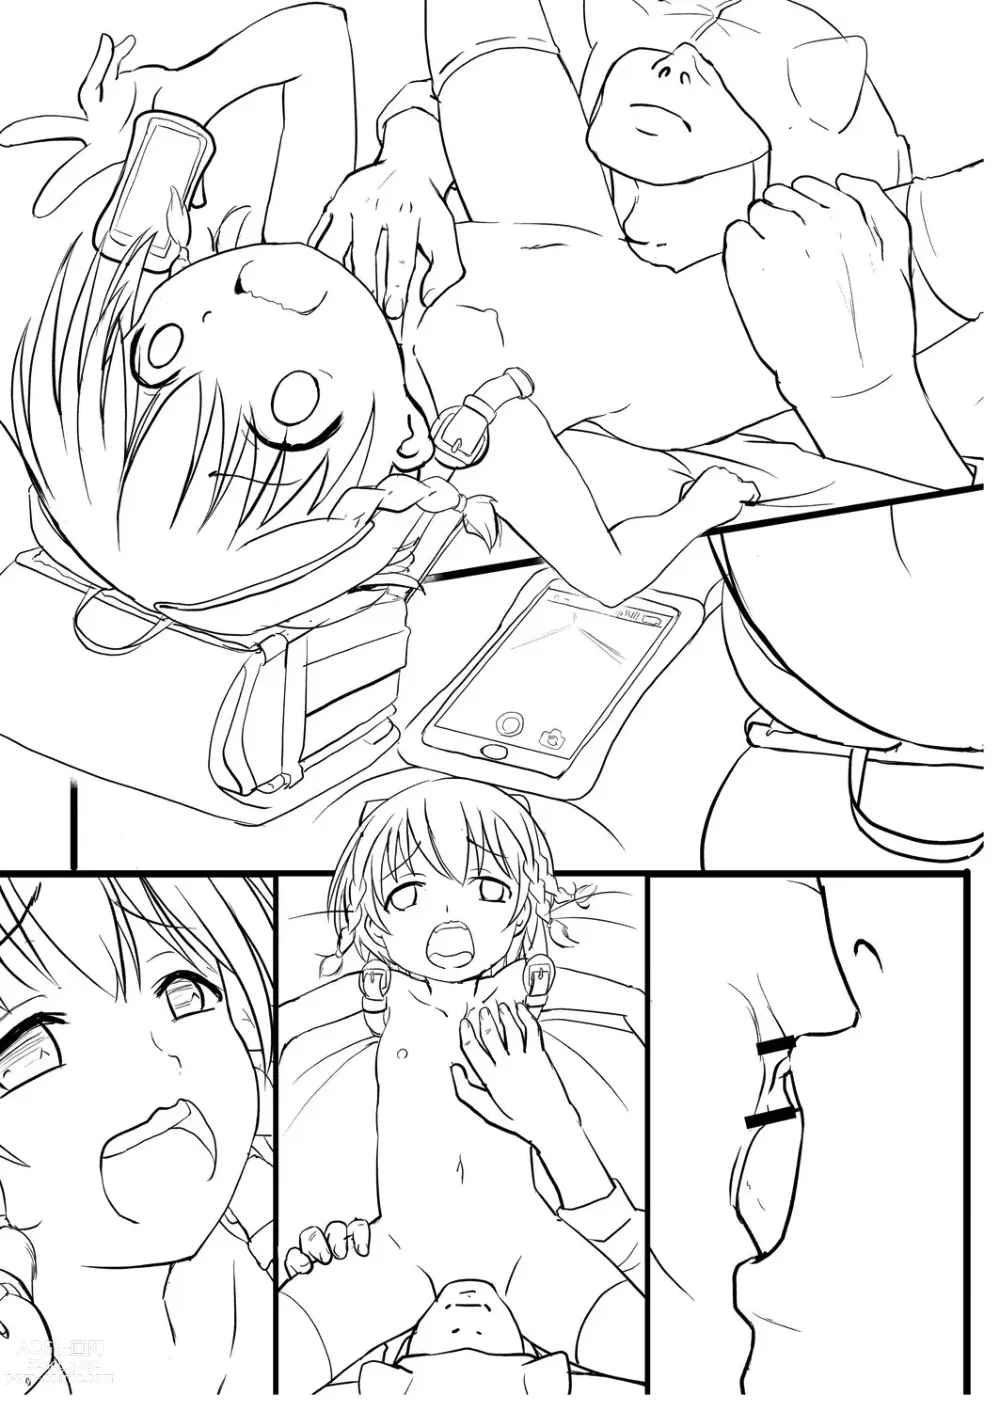 Page 228 of manga 조그마한데도 빗치 같은 암컷을 좋아하는 거지요